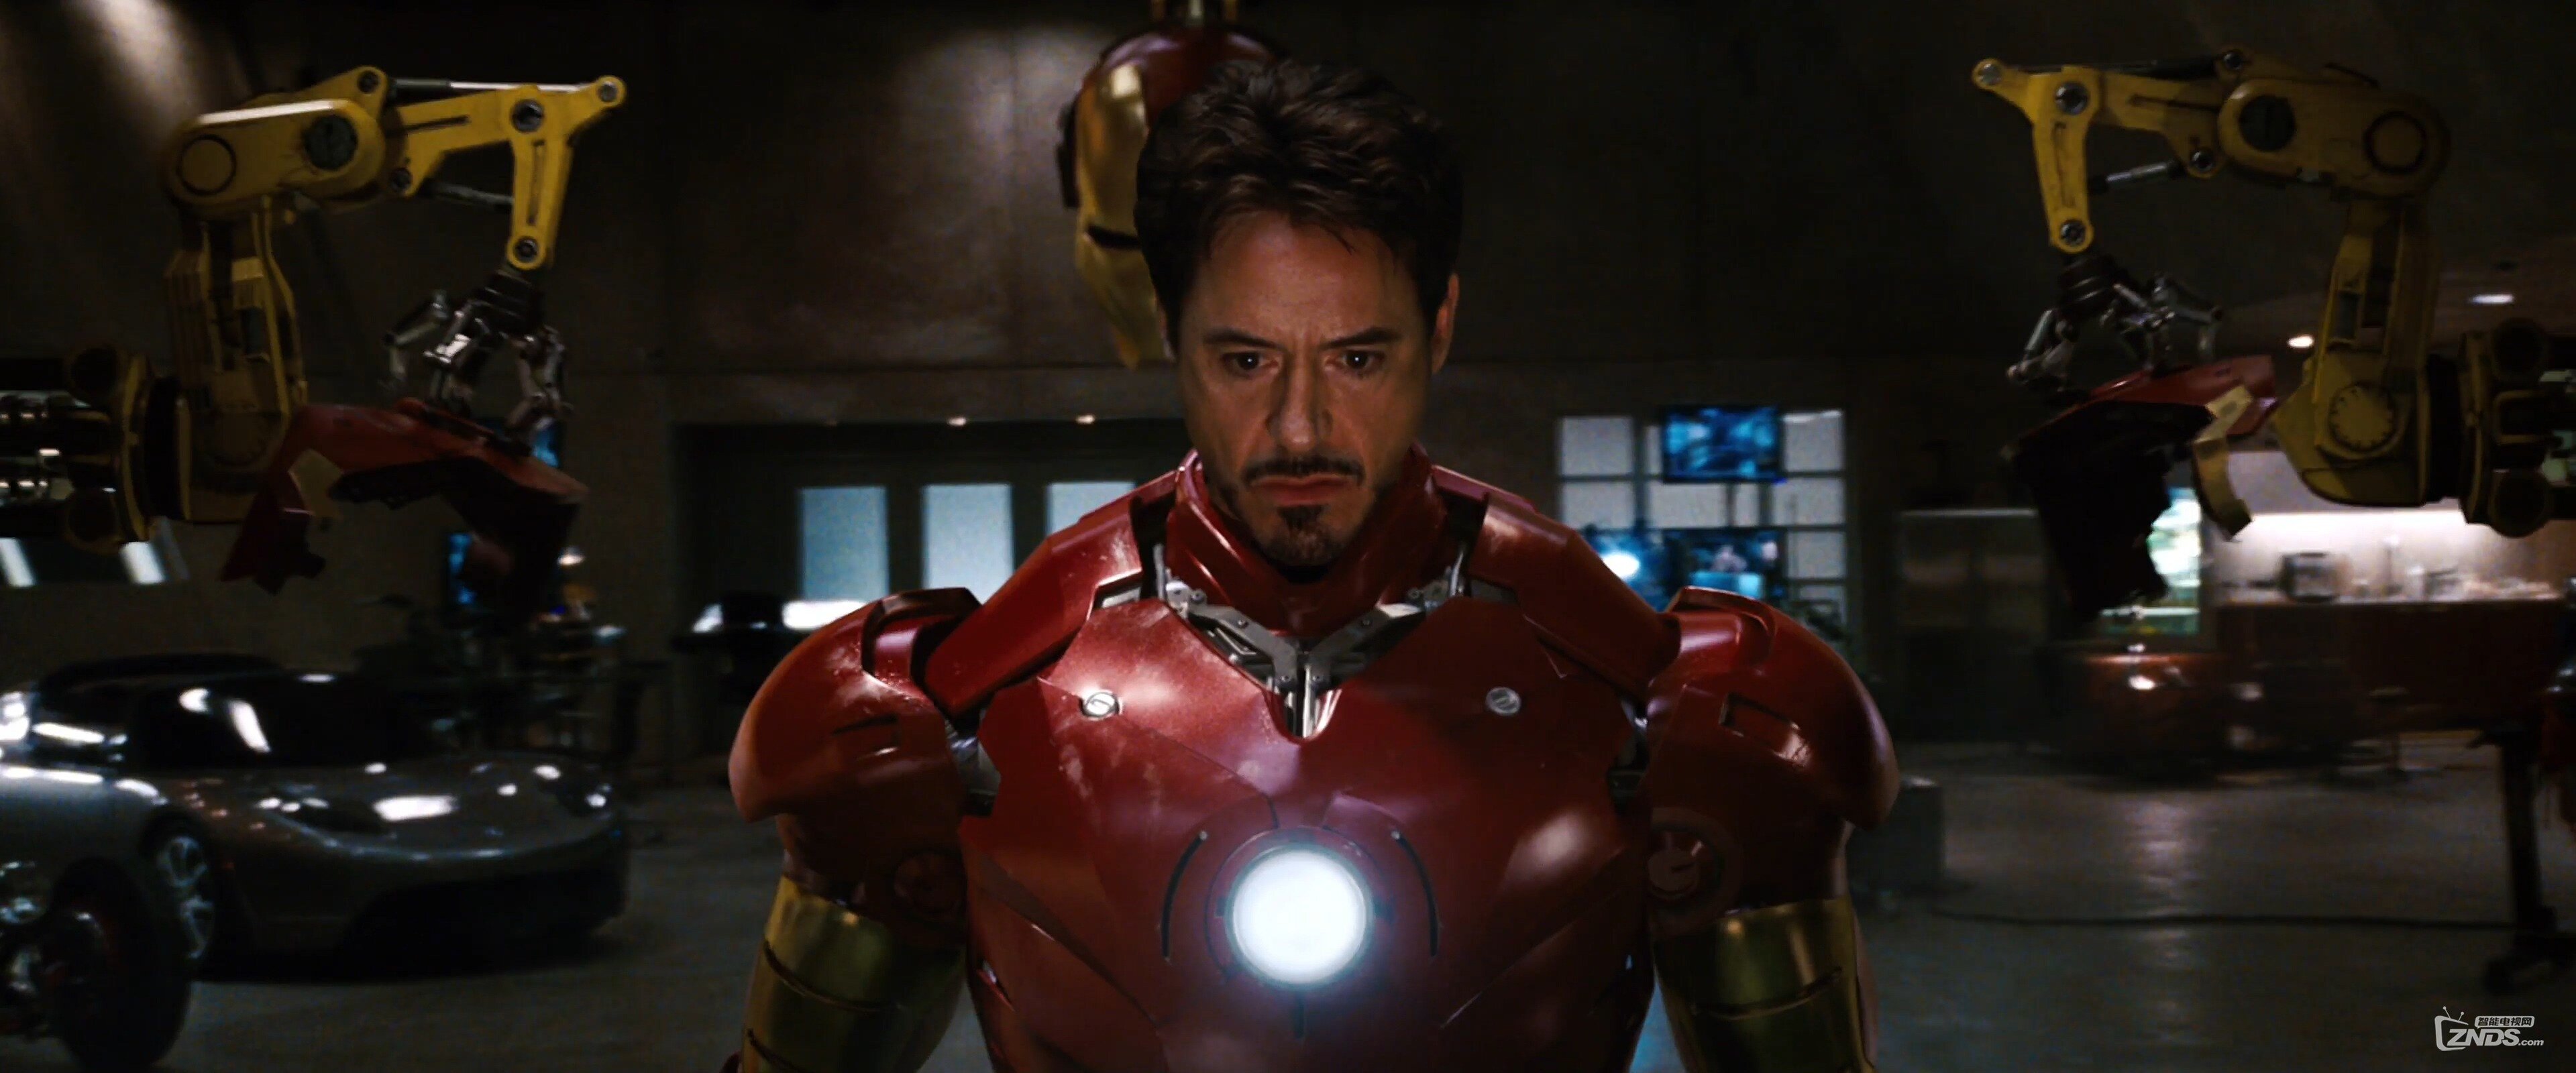 Iron Man (2008) 4K UHD Upscaled AC3 Soup.mkv_20160318_005162.921.jpg